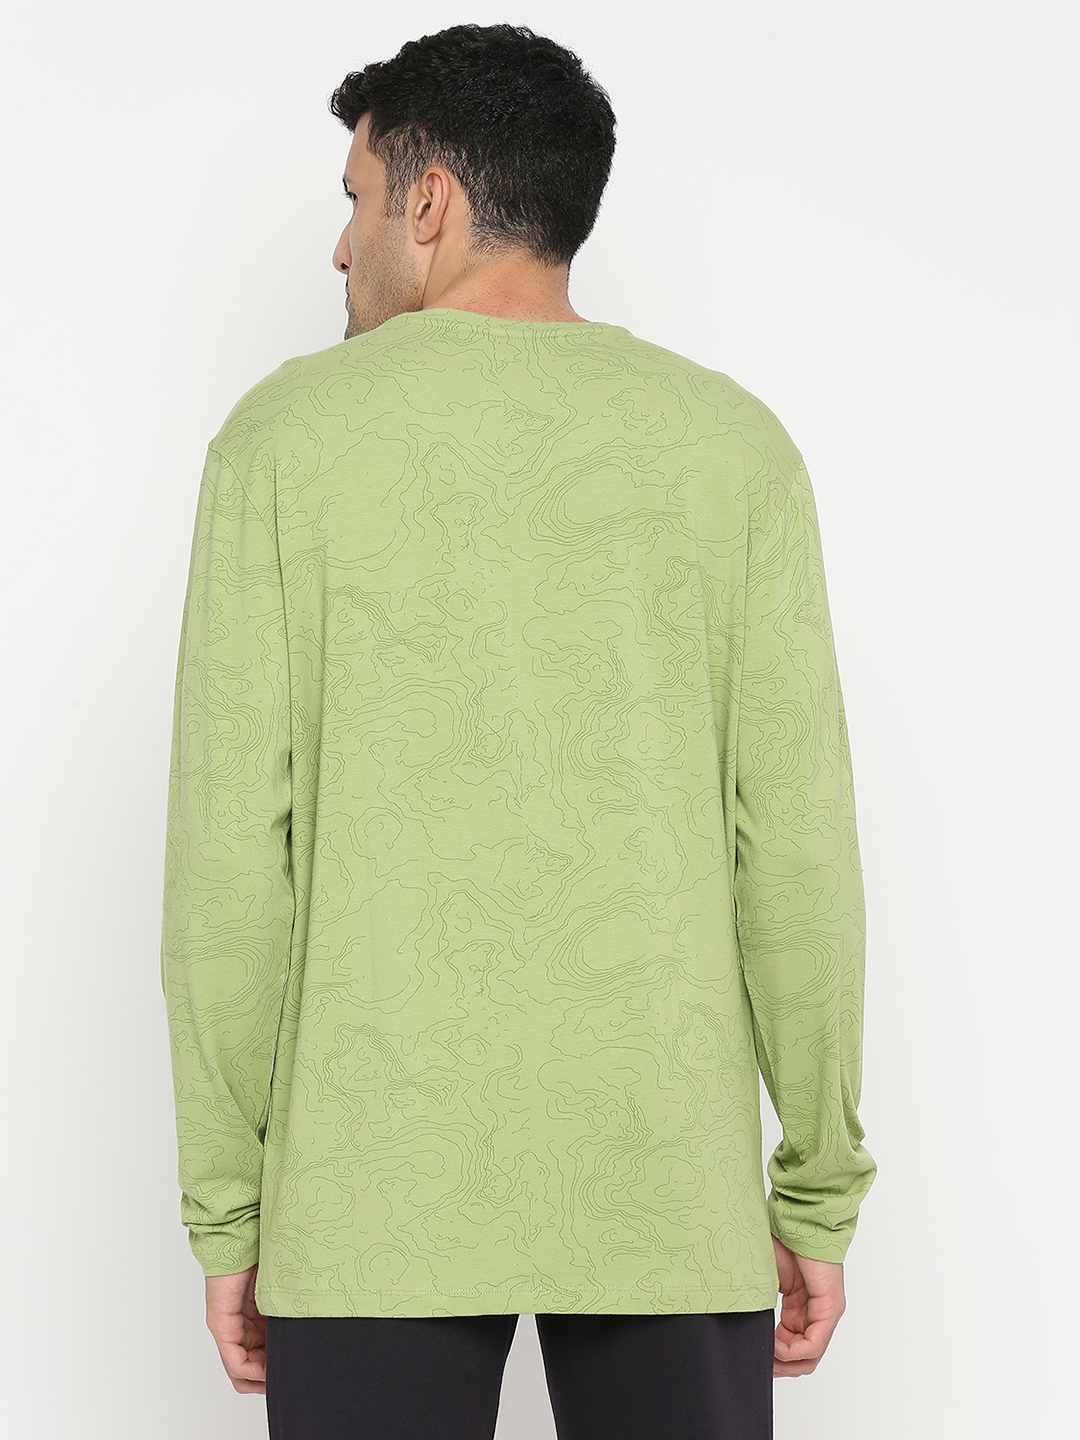 Spykar Dusty Green Cotton Blend Full Sleeve Printed Casual T-Shirt For Men